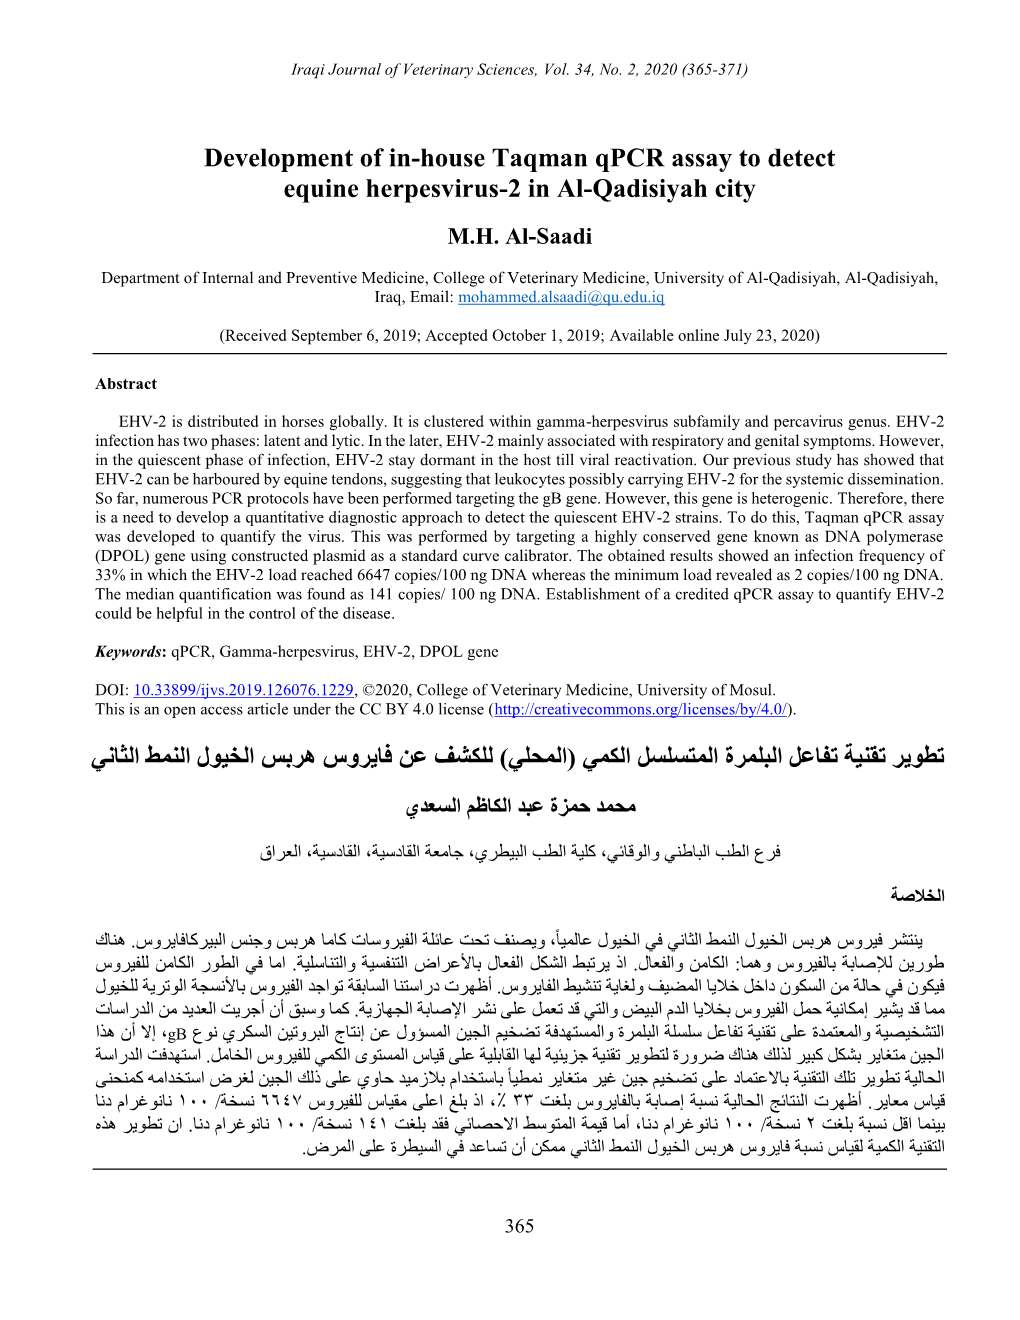 Development of In-House Taqman Qpcr Assay to Detect Equine Herpesvirus-2 in Al-Qadisiyah City ﻟﺛﺎﻧﻲ ا ﻓﺎﯾرو